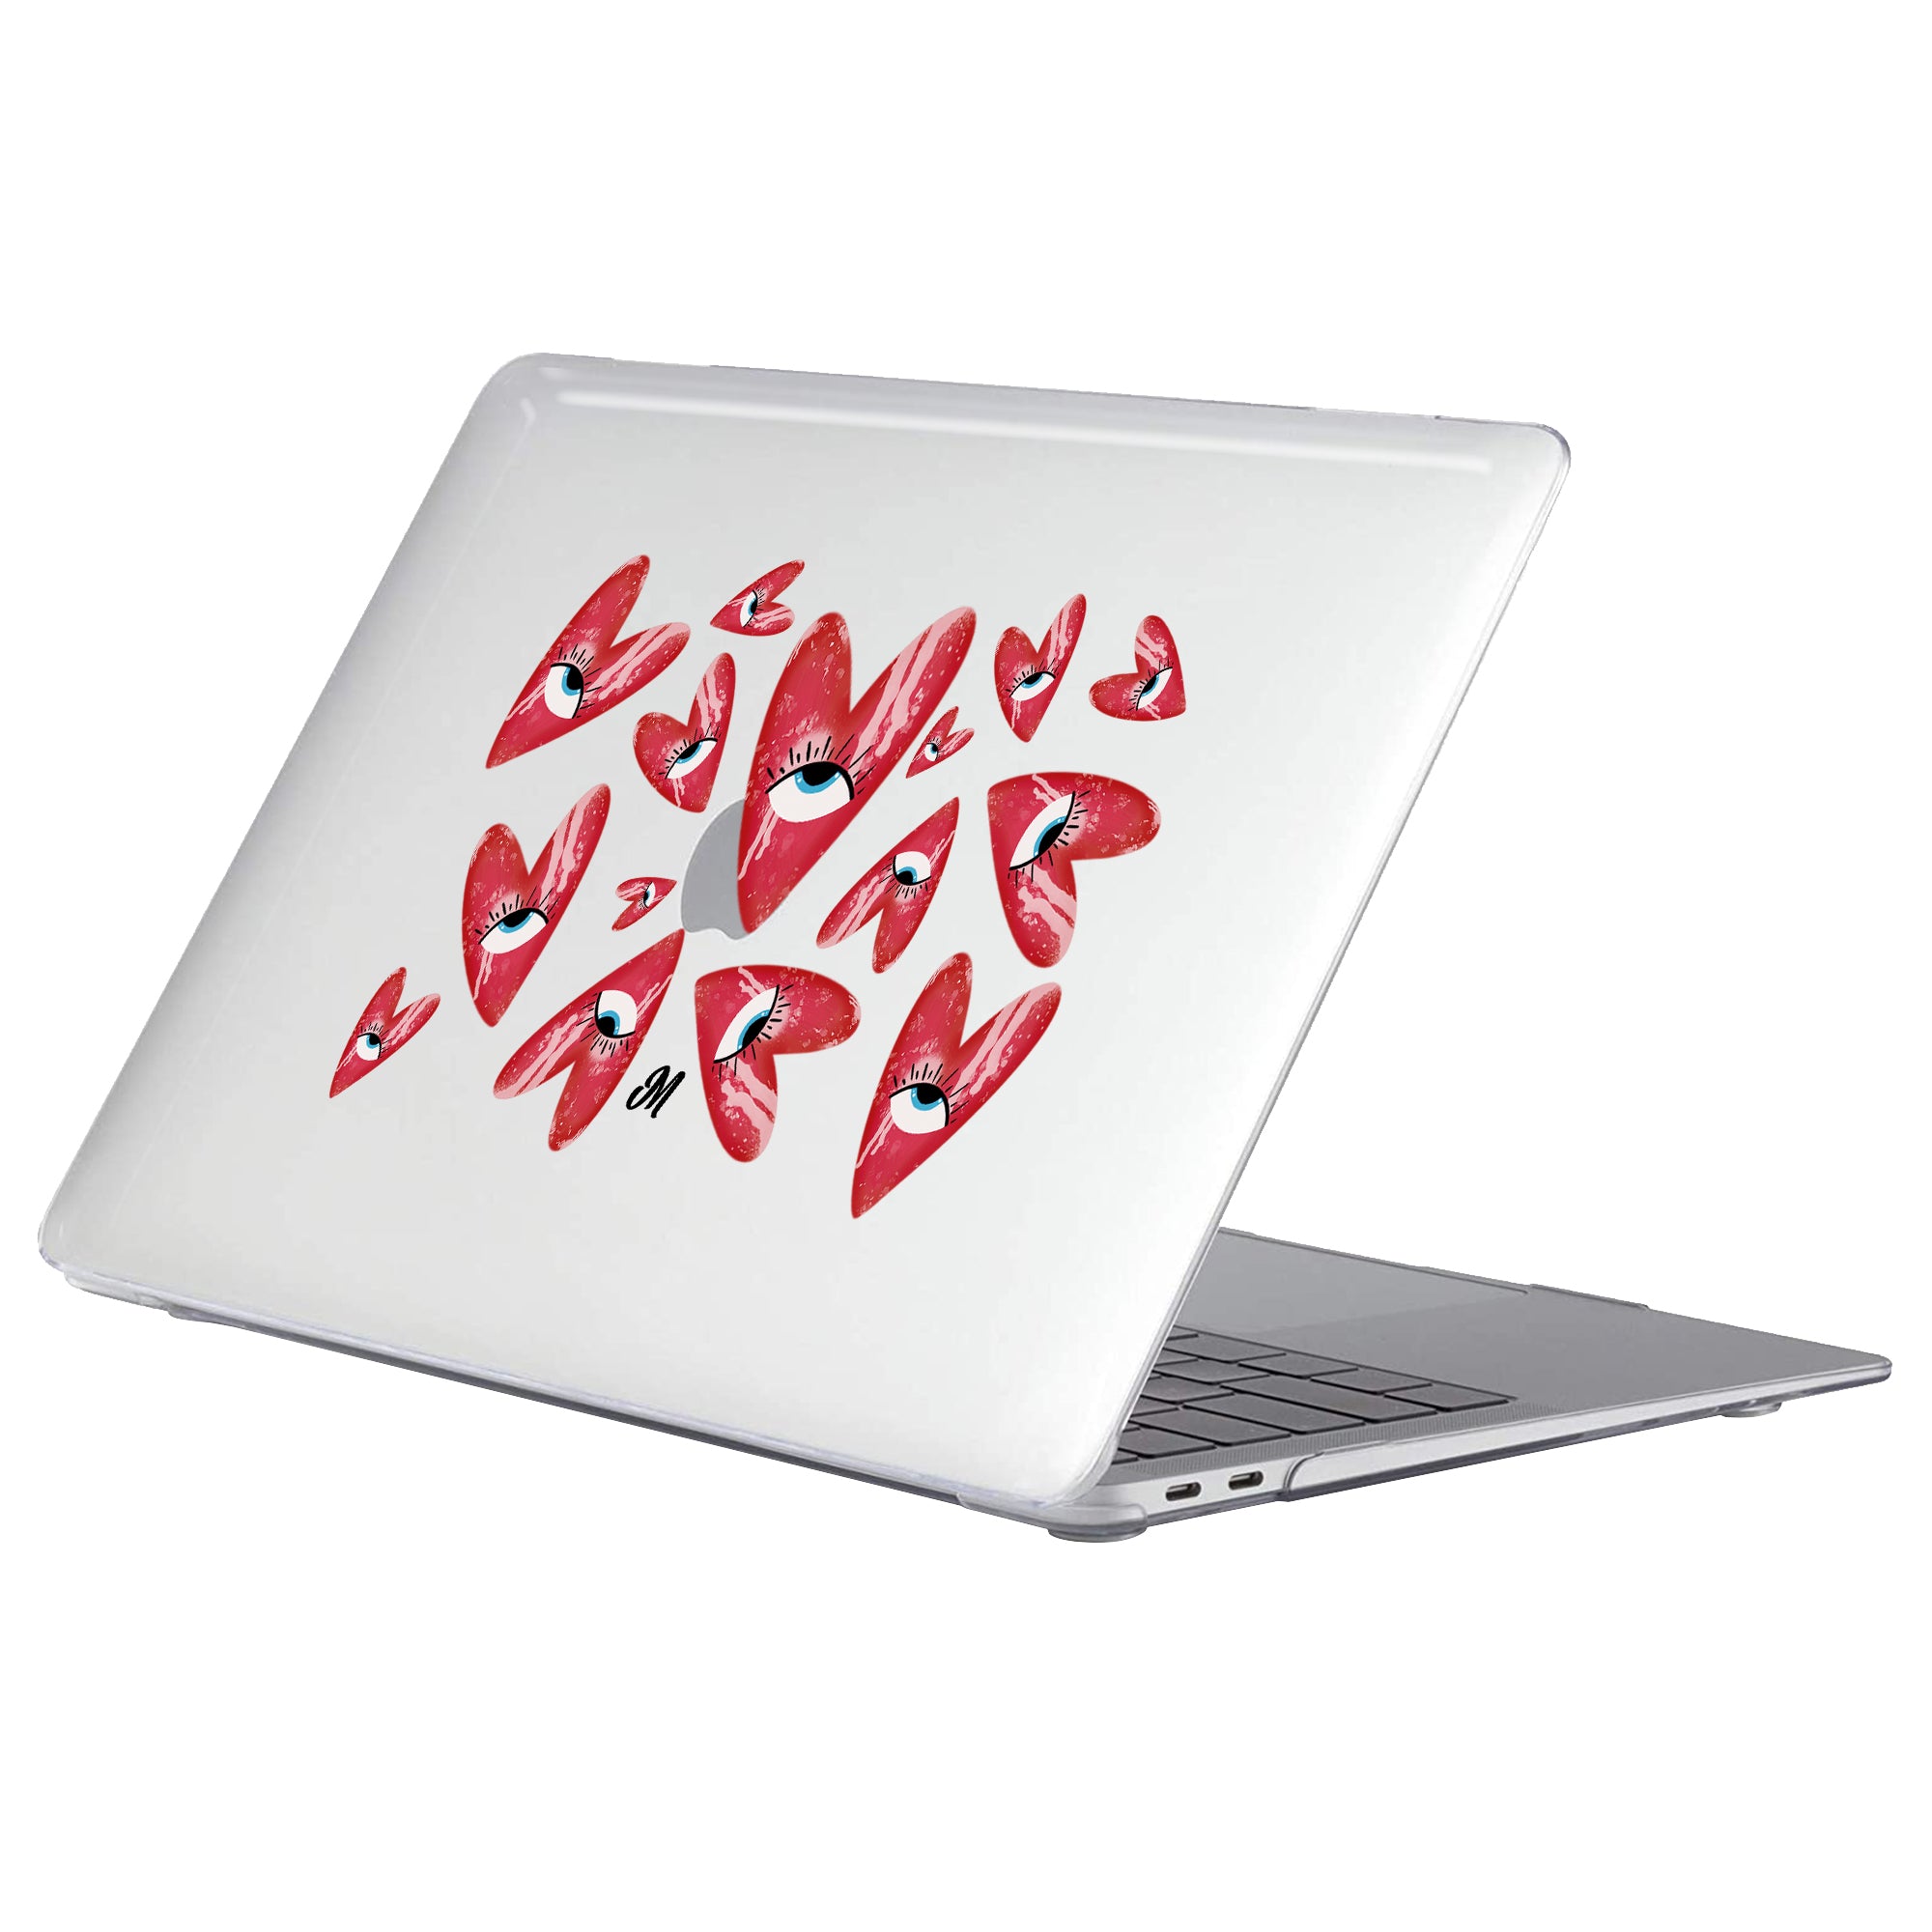 Sad Hearts MacBook Case - Mandala Cases